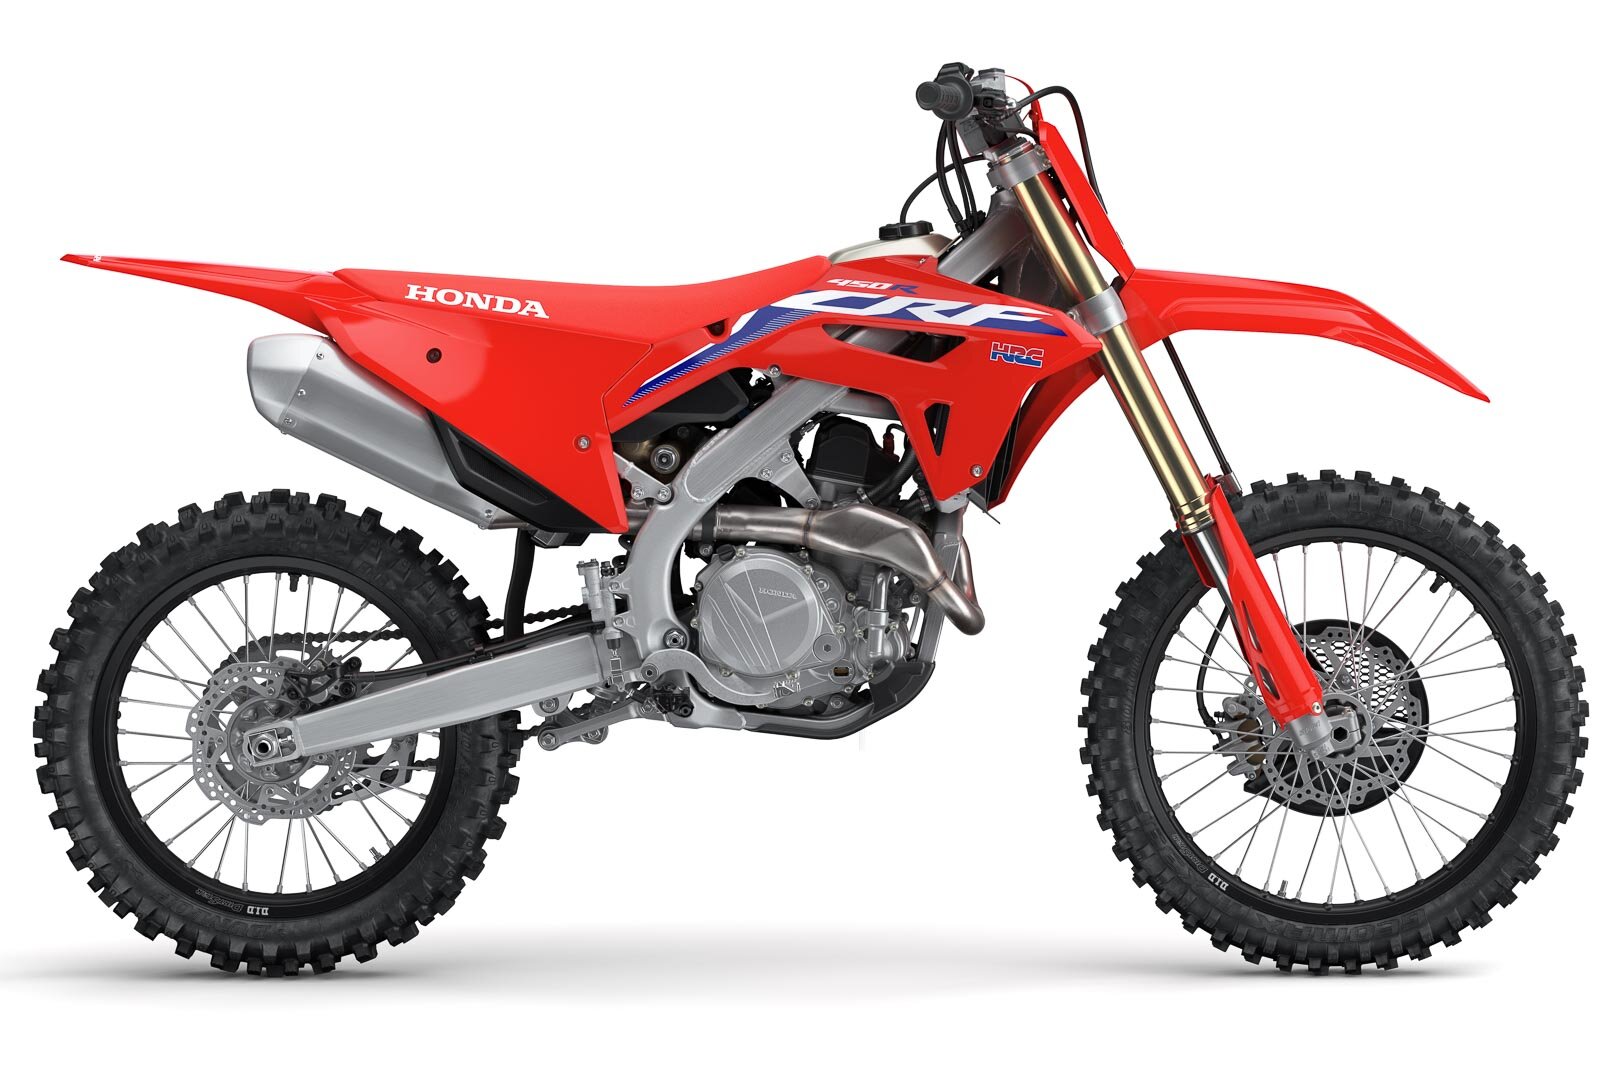 2021-Honda-CRF450R-First-Look-motocross-supercross-motorcycle-9.jpg